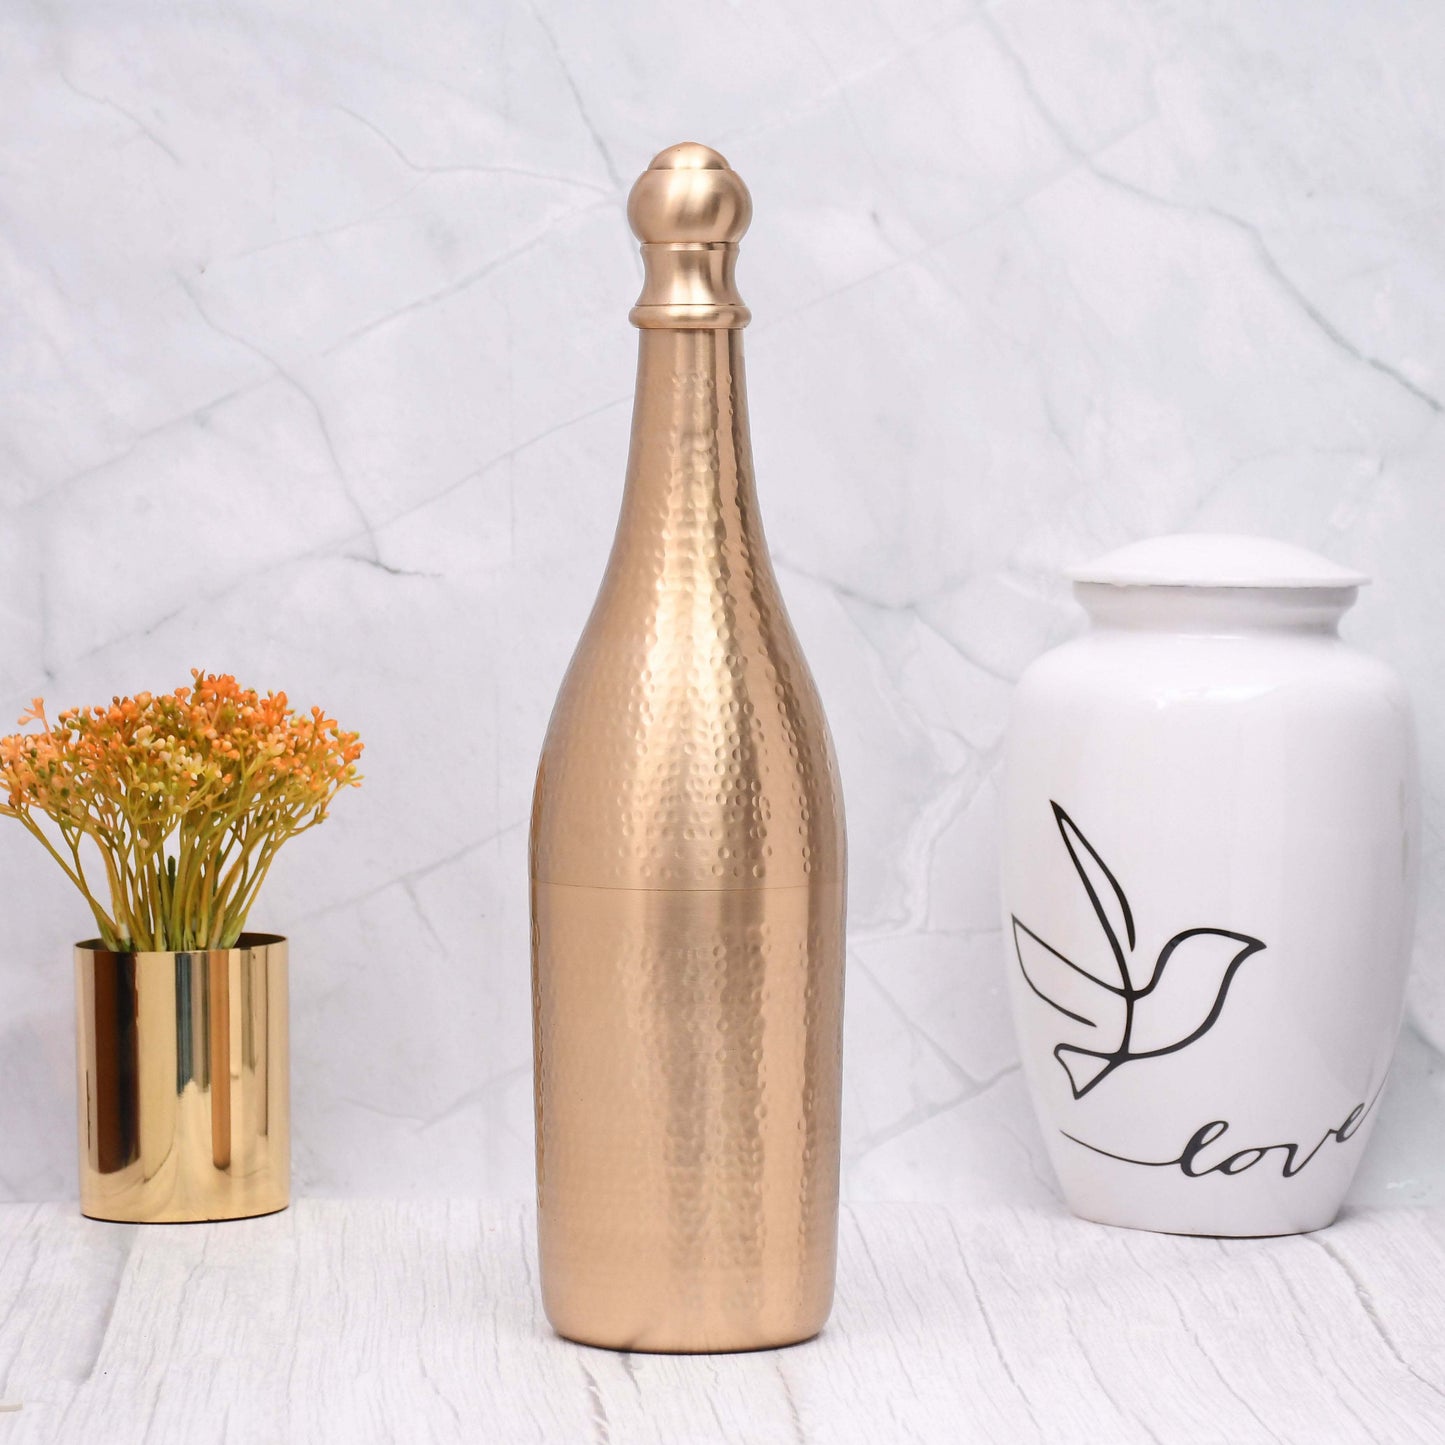 SAMA Homes - beautifullly designed brass matt finished champagne bottle case with elegant design